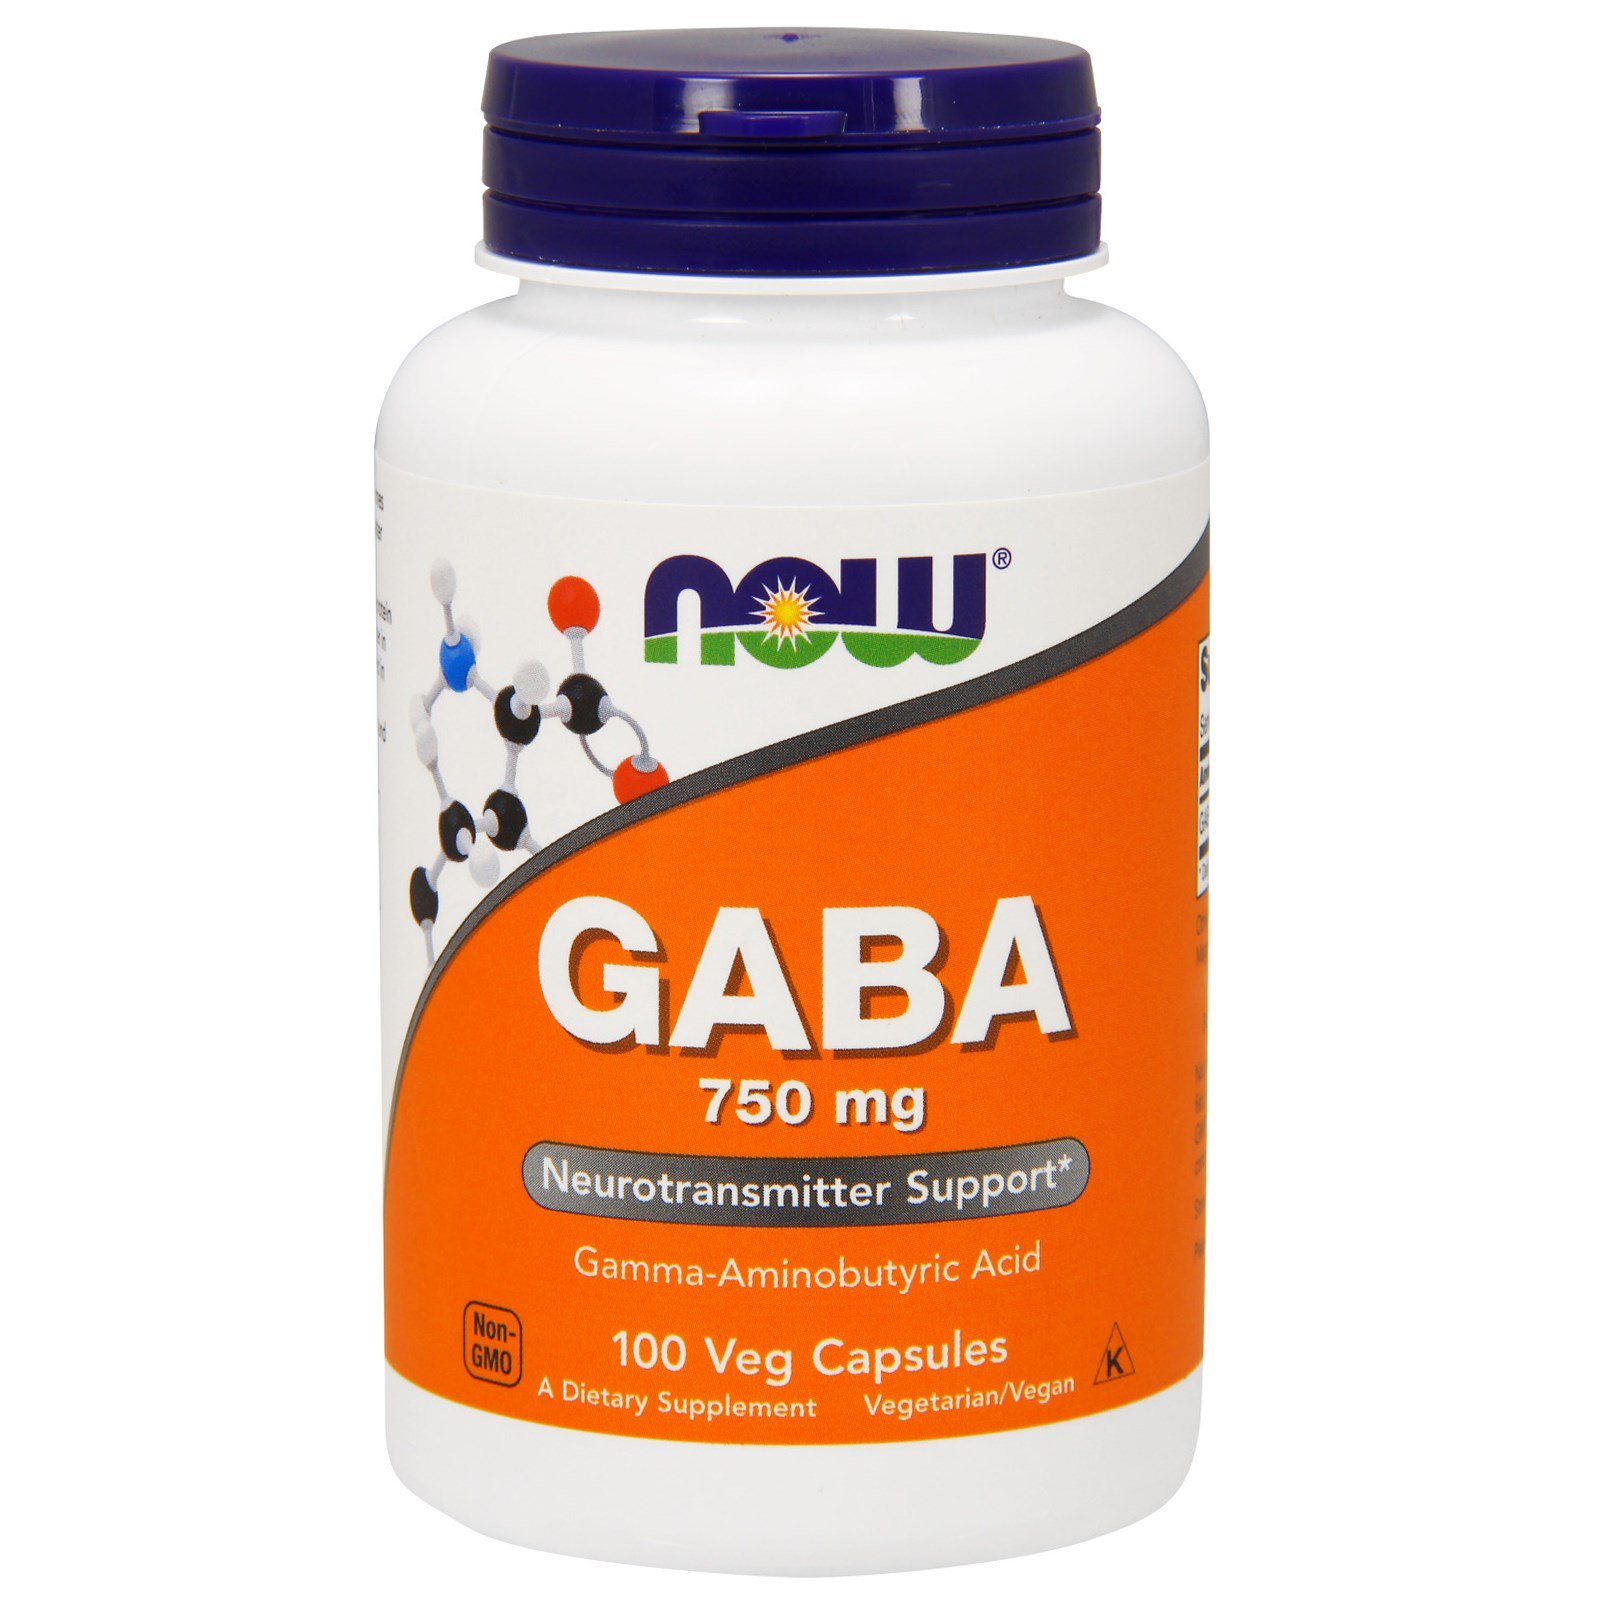 GABA, ГАБА Гамма-Аминомасляная Кислота (ГАМК) 750 мг - 100 капсул